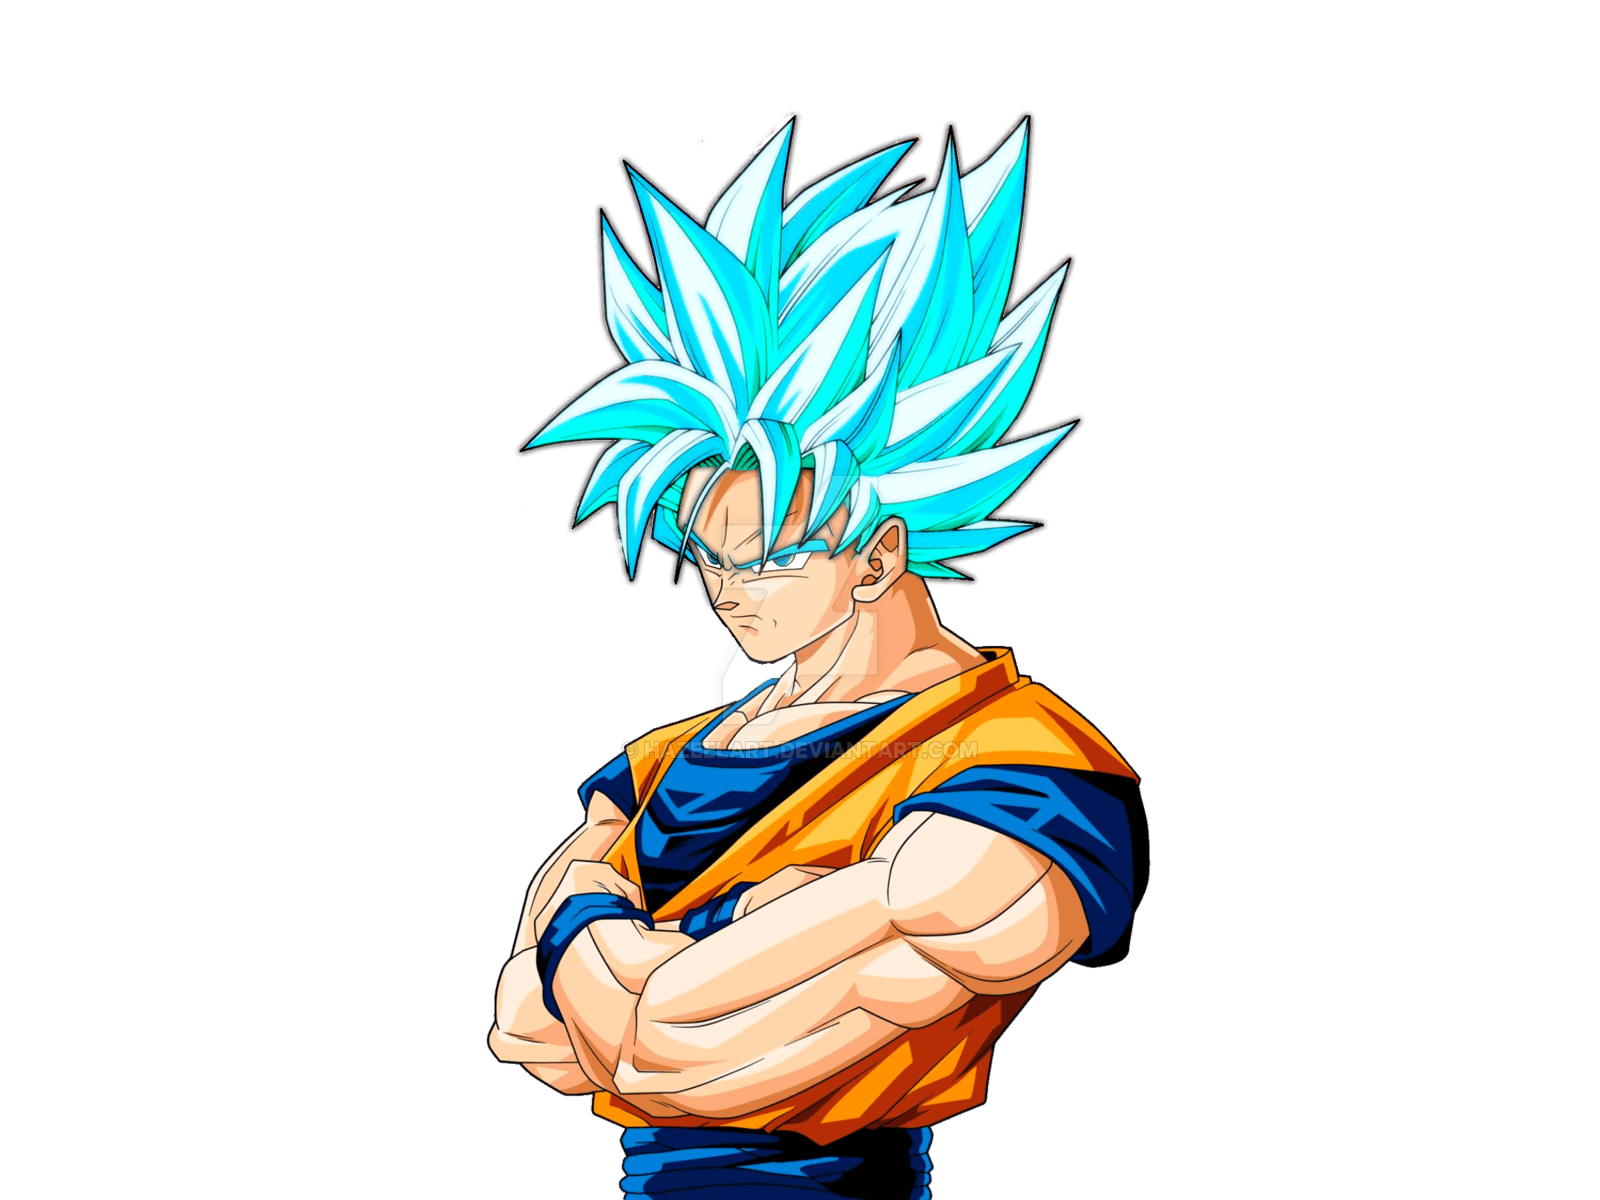 Goku Super Saiyan God SSJ - (Full Power)